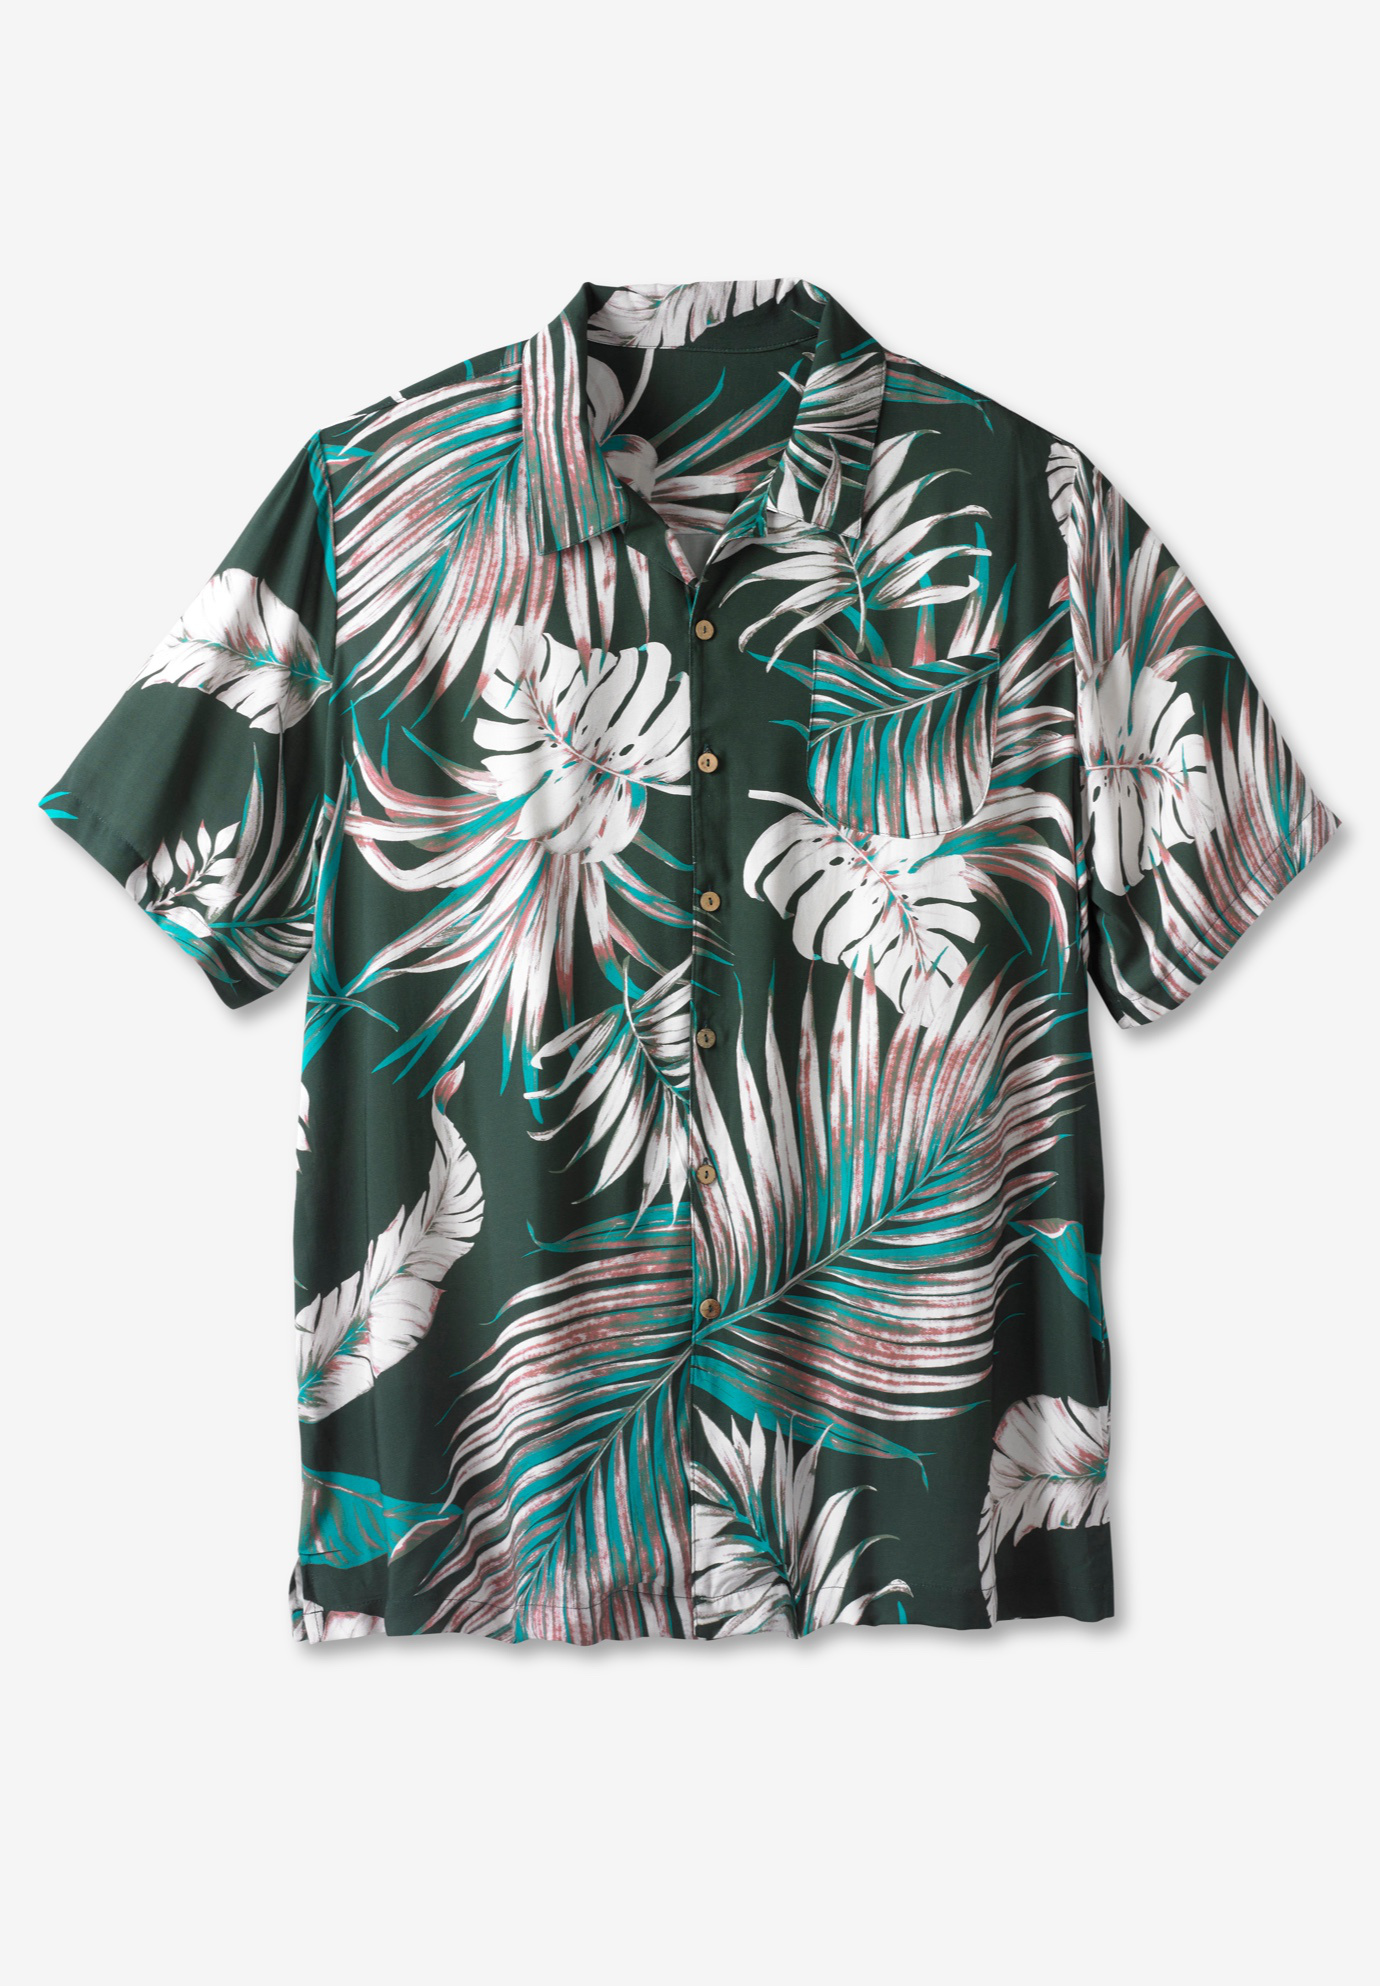 KS Island Printed Rayon Short-Sleeve Shirt, 